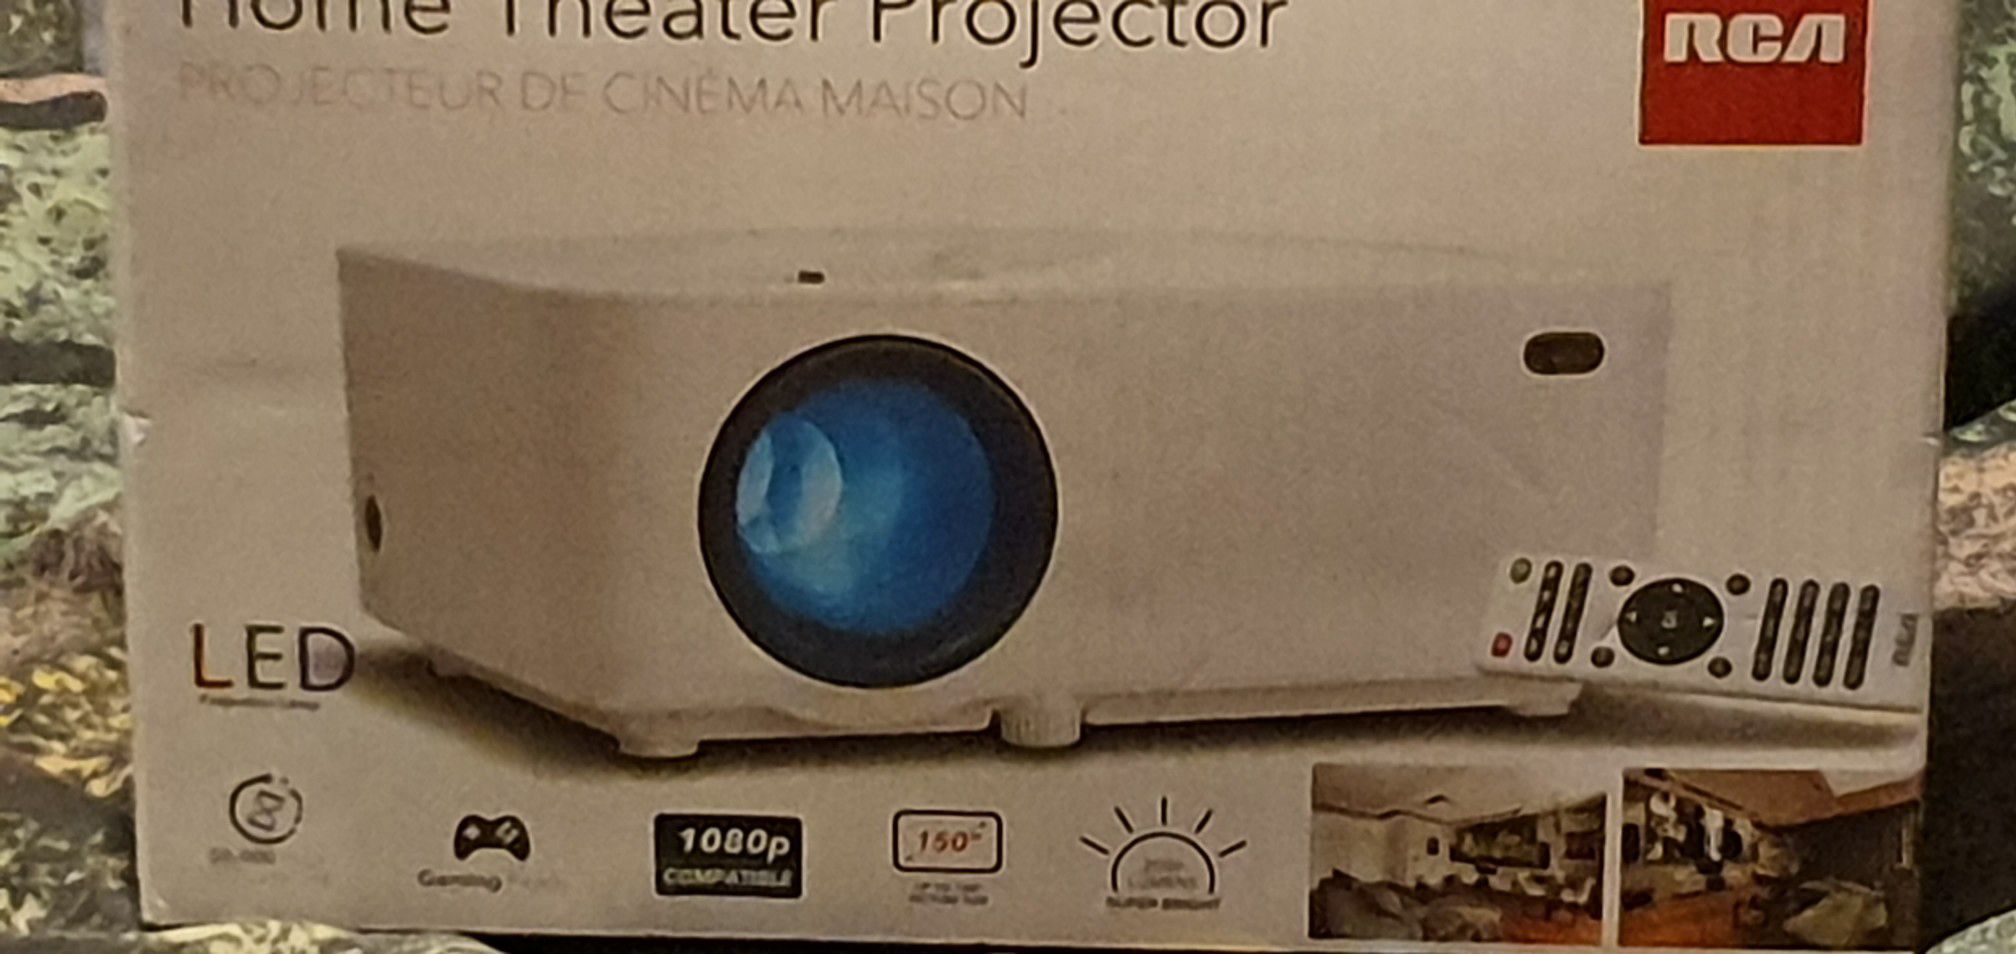 Rca projector